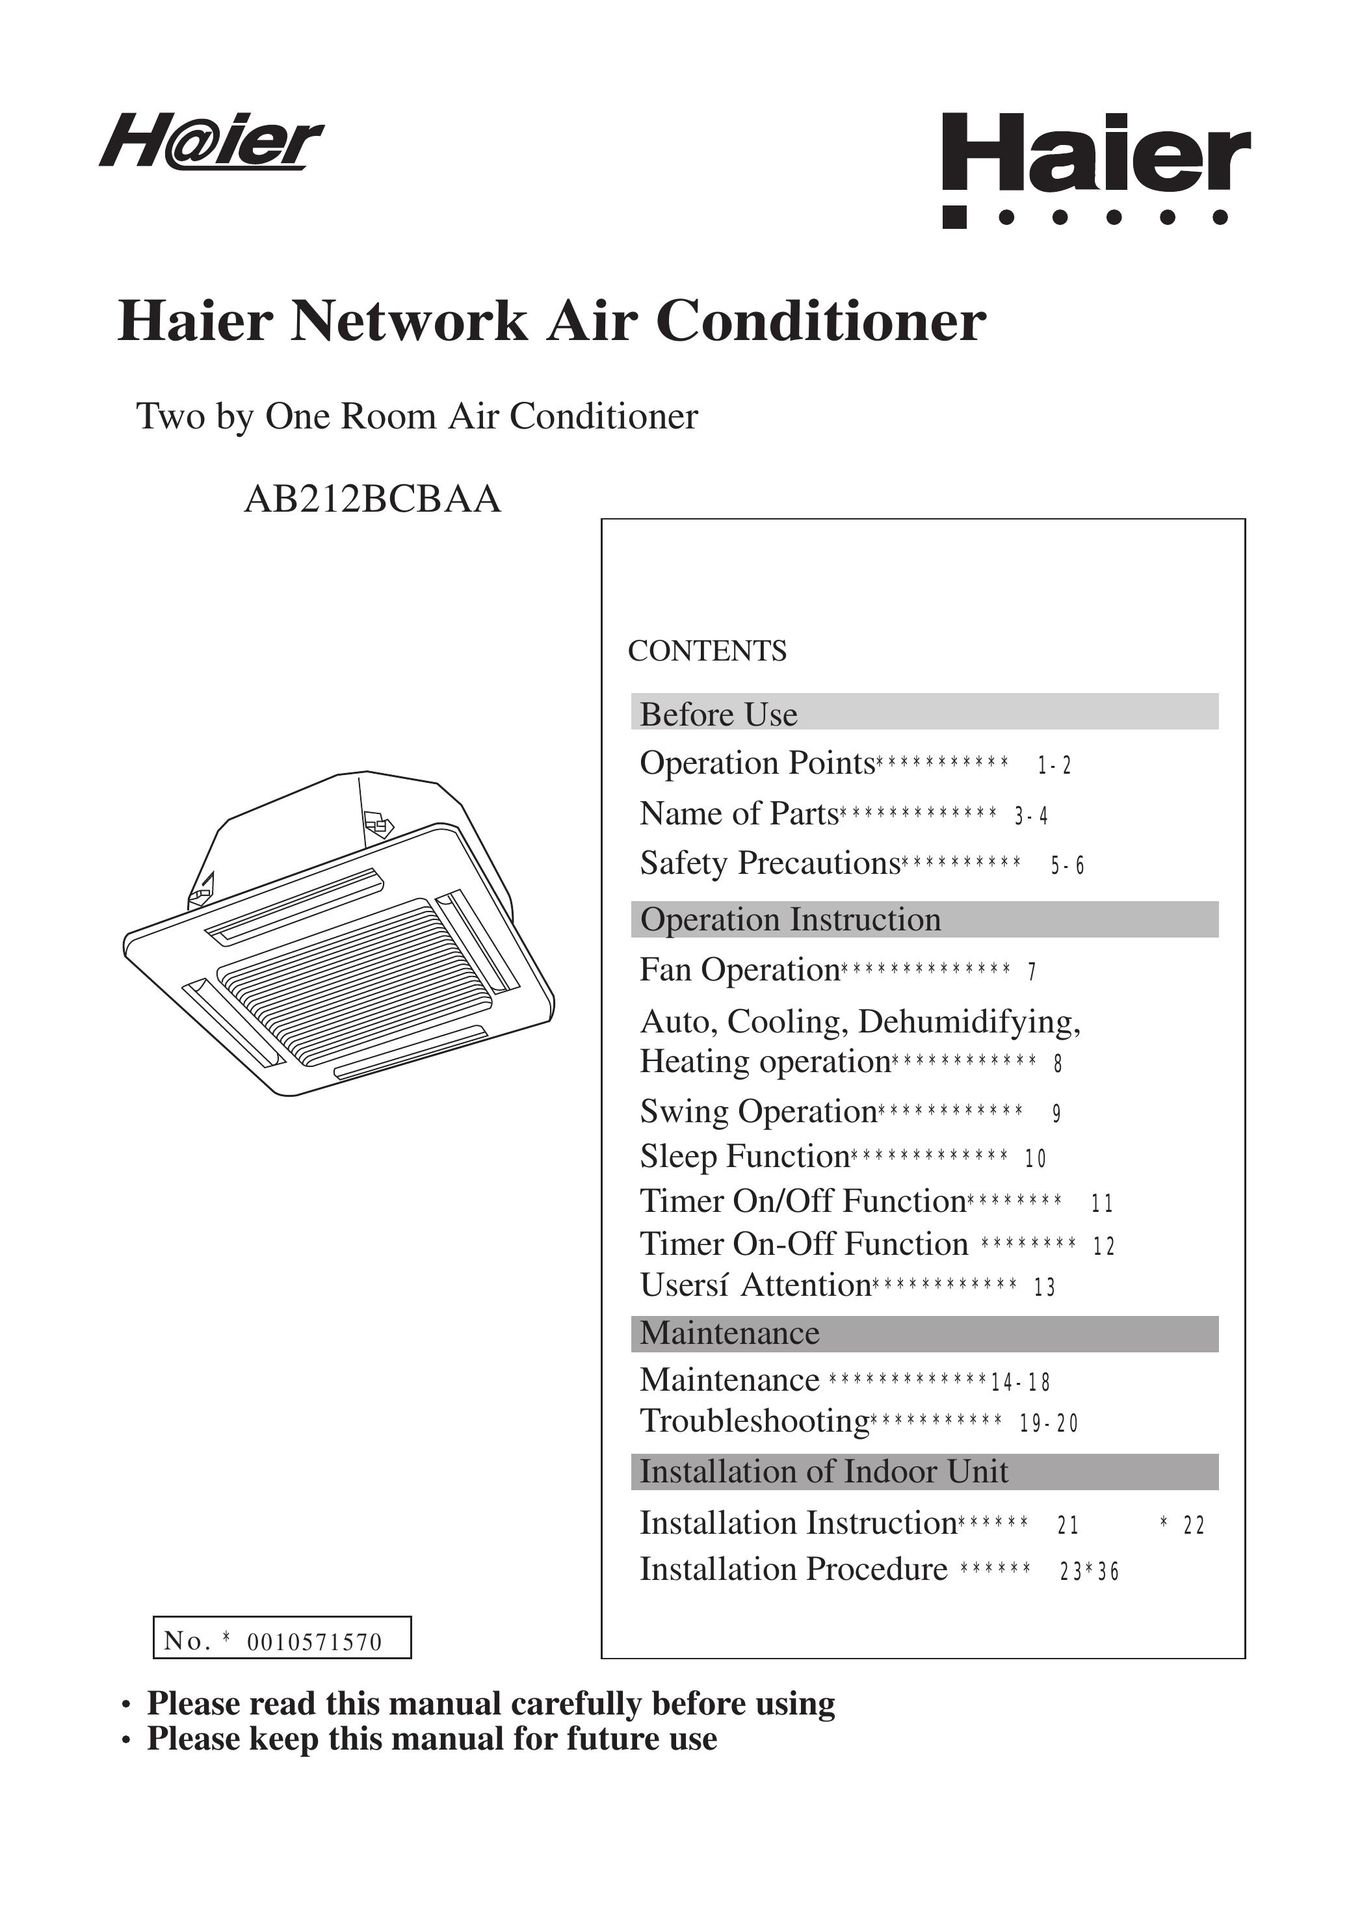 Haier AB212BCBAA Air Conditioner User Manual